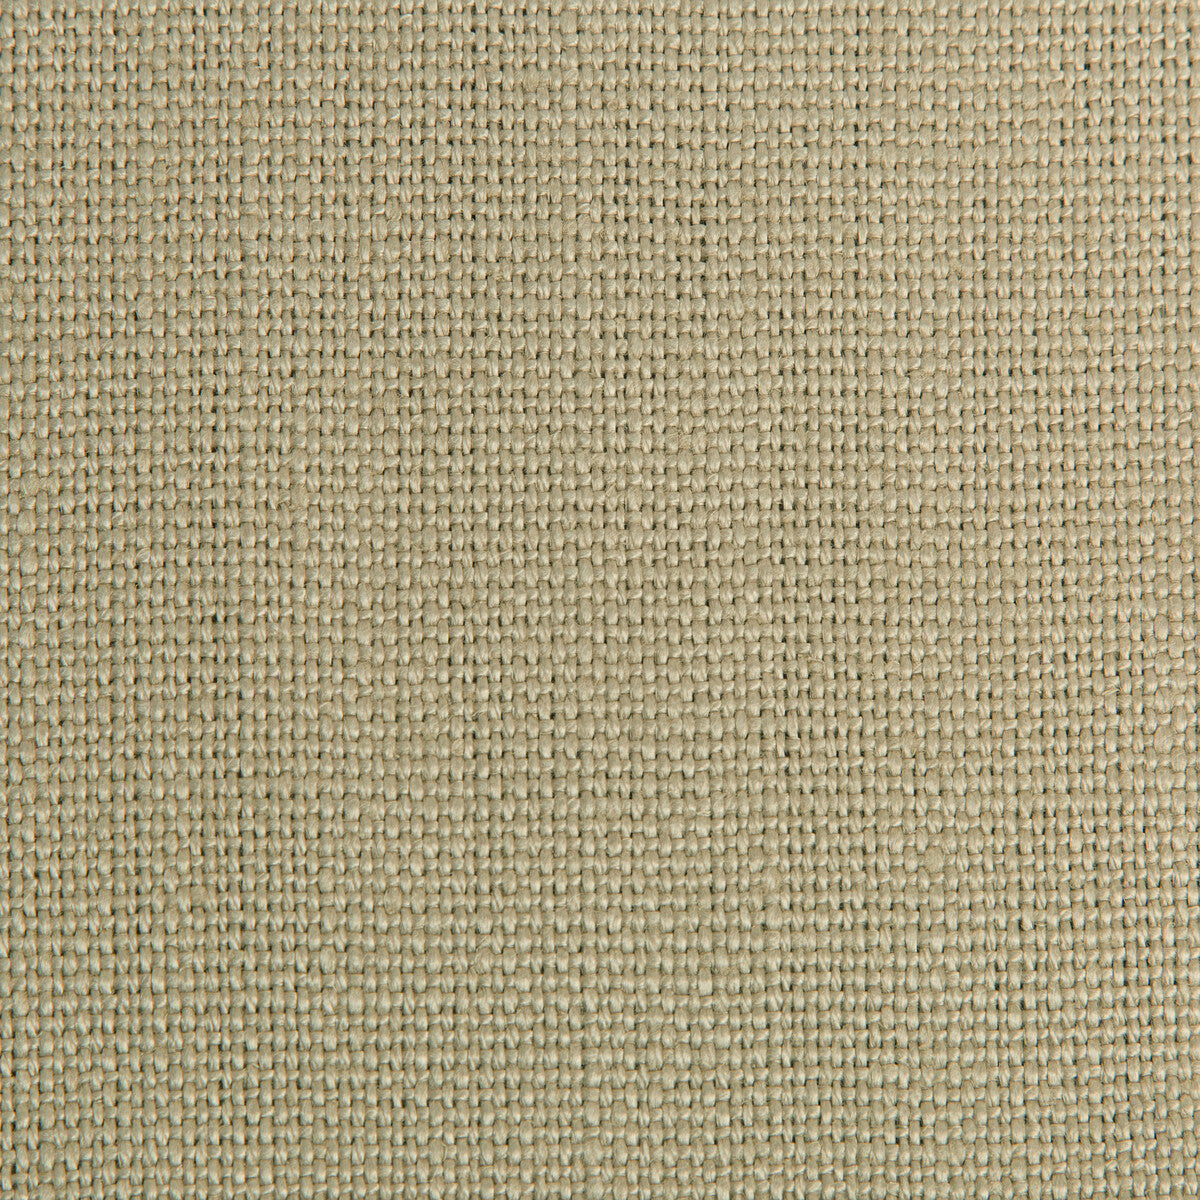 Stone Harbor fabric in pebble color - pattern 27591.116.0 - by Kravet Basics